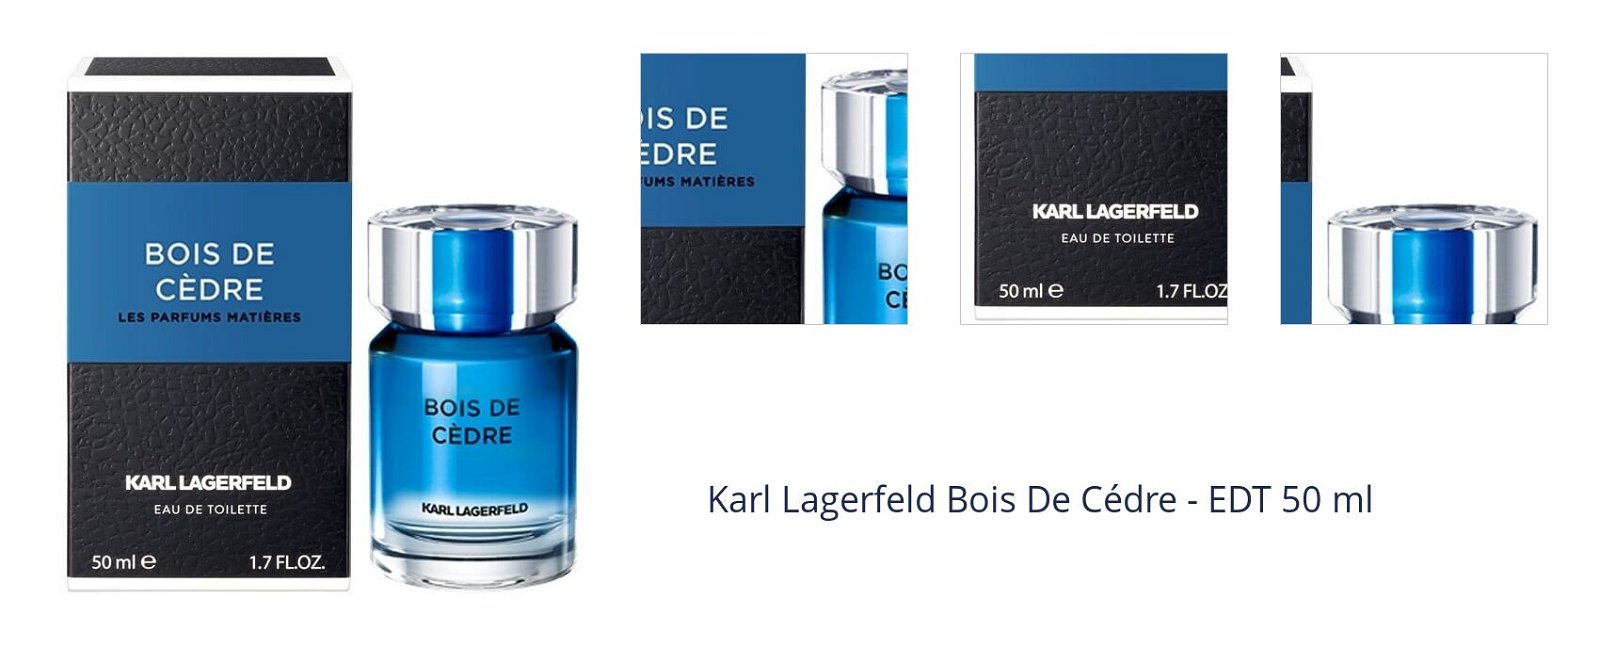 Karl Lagerfeld Bois De Cédre - EDT 50 ml 7